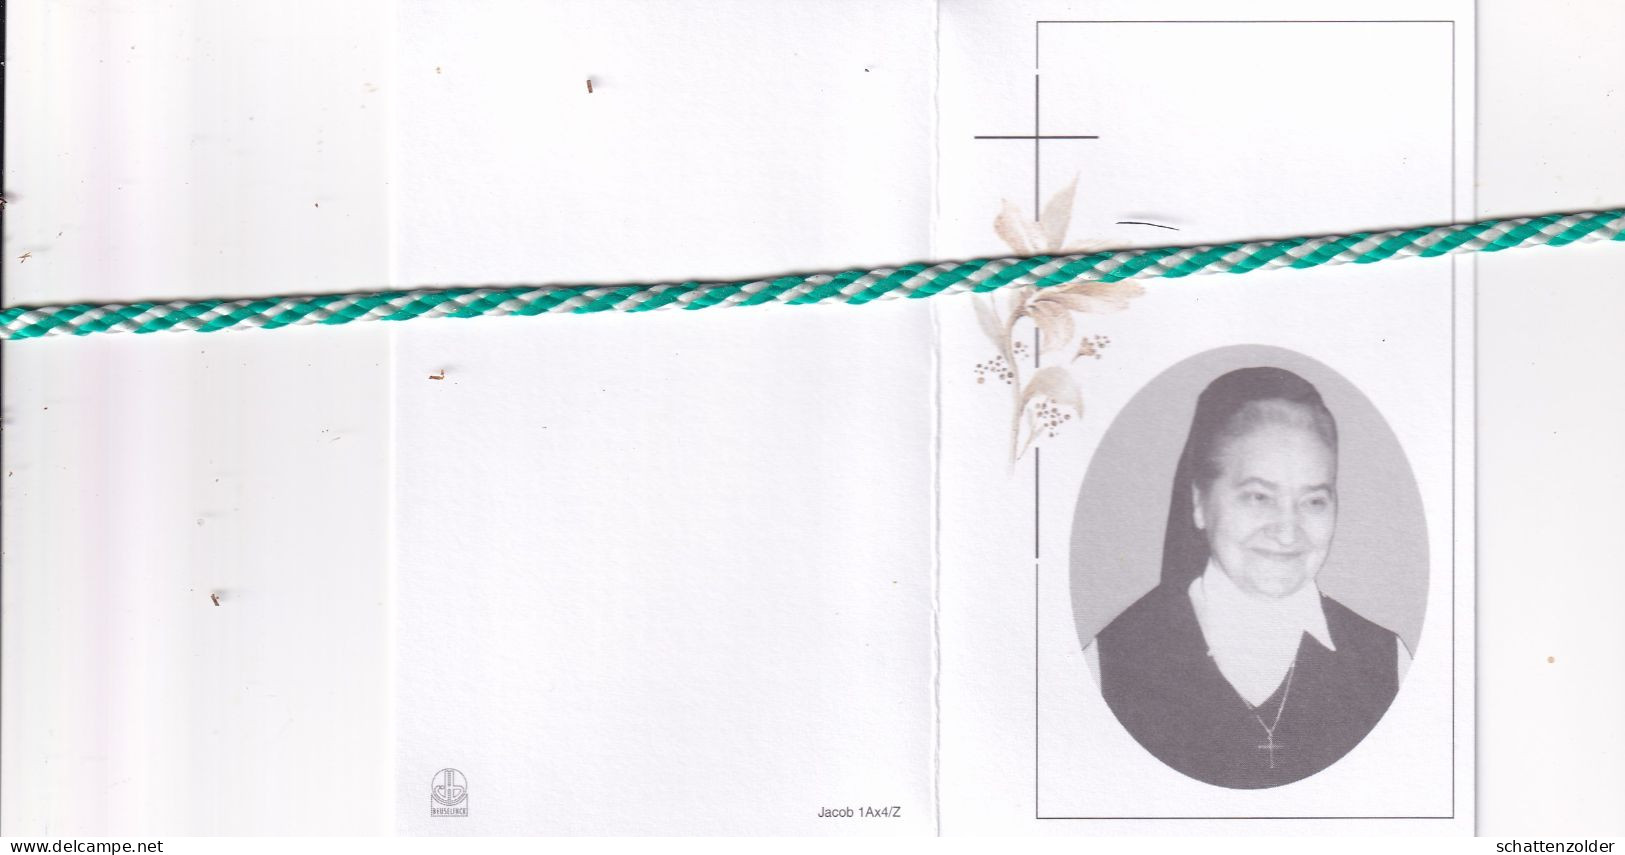 Zuster Ludwina (Maria Rosalia Aerts), Herselt 1909, Geel 2002. Foto - Obituary Notices